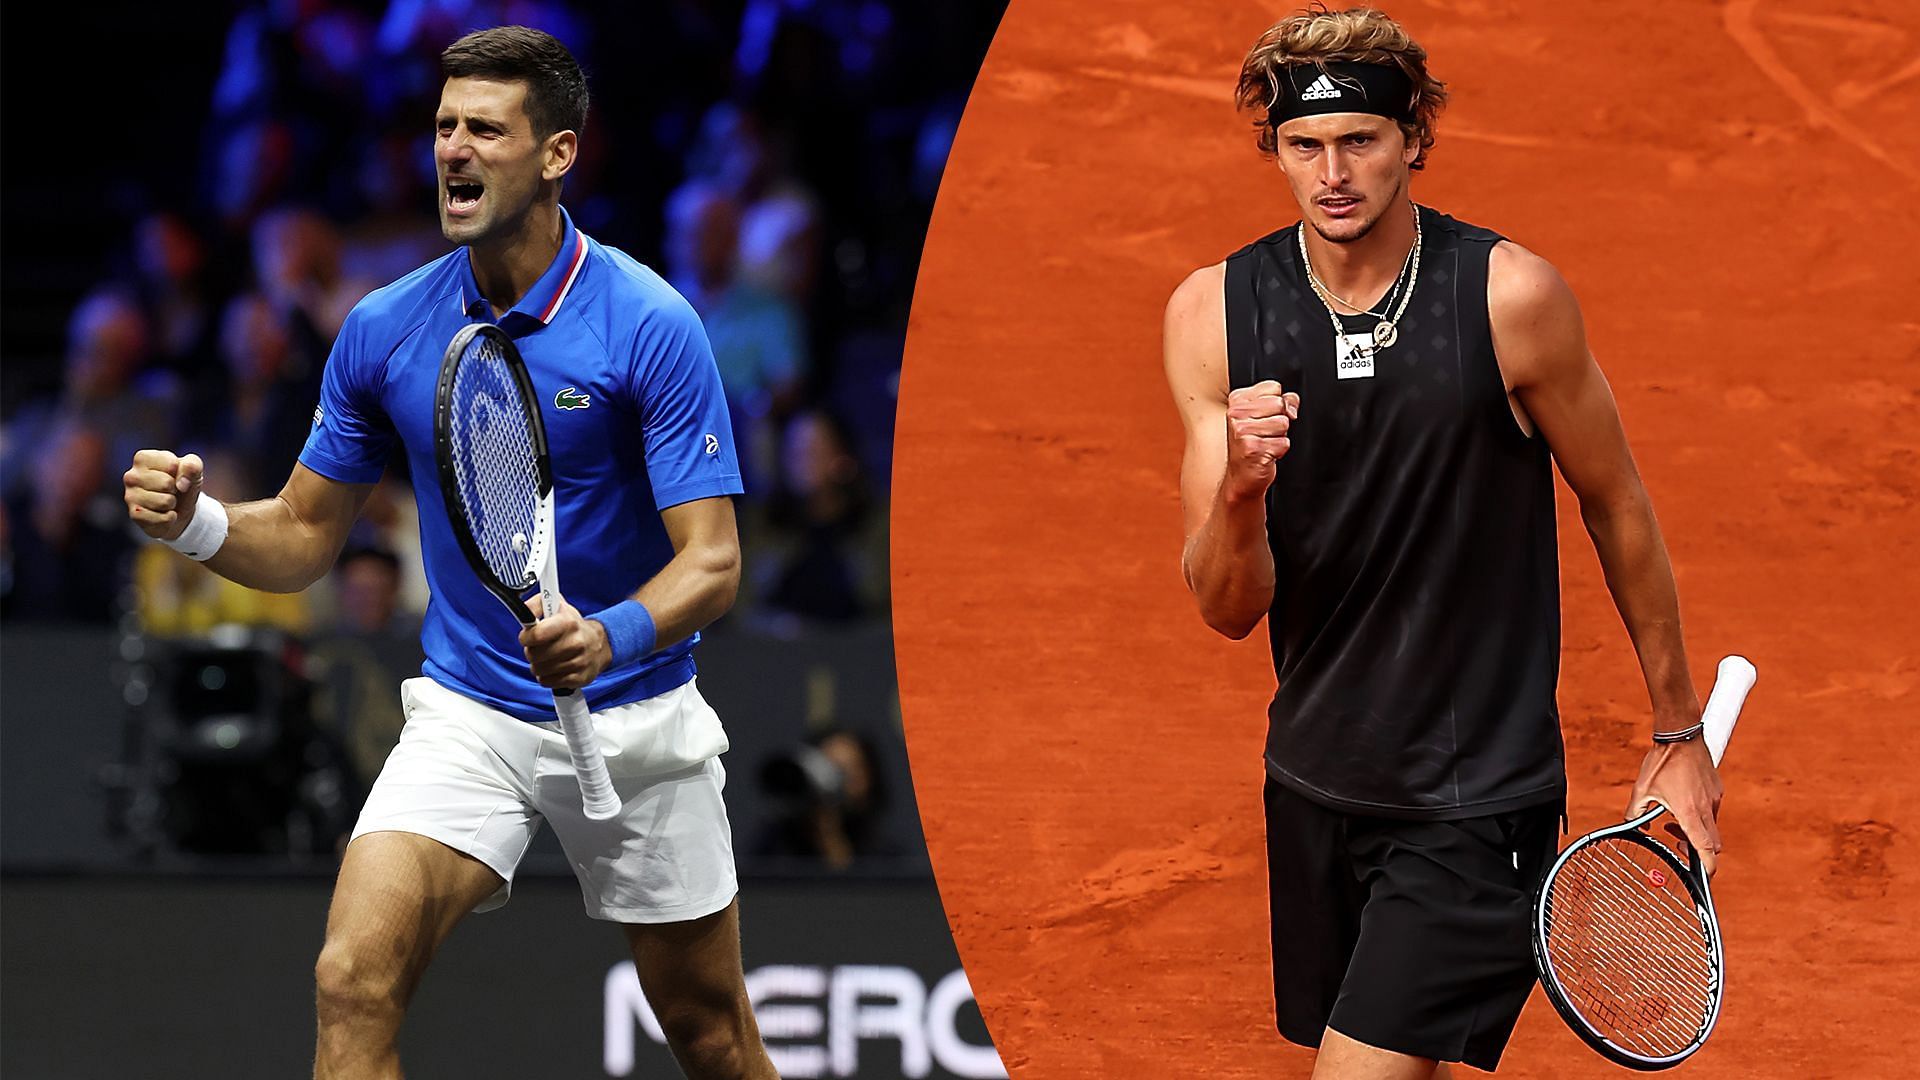 Novak Djokovic vs Alexander Zverev Where to watch, TV schedule, live streaming details and more World Tennis League 2022